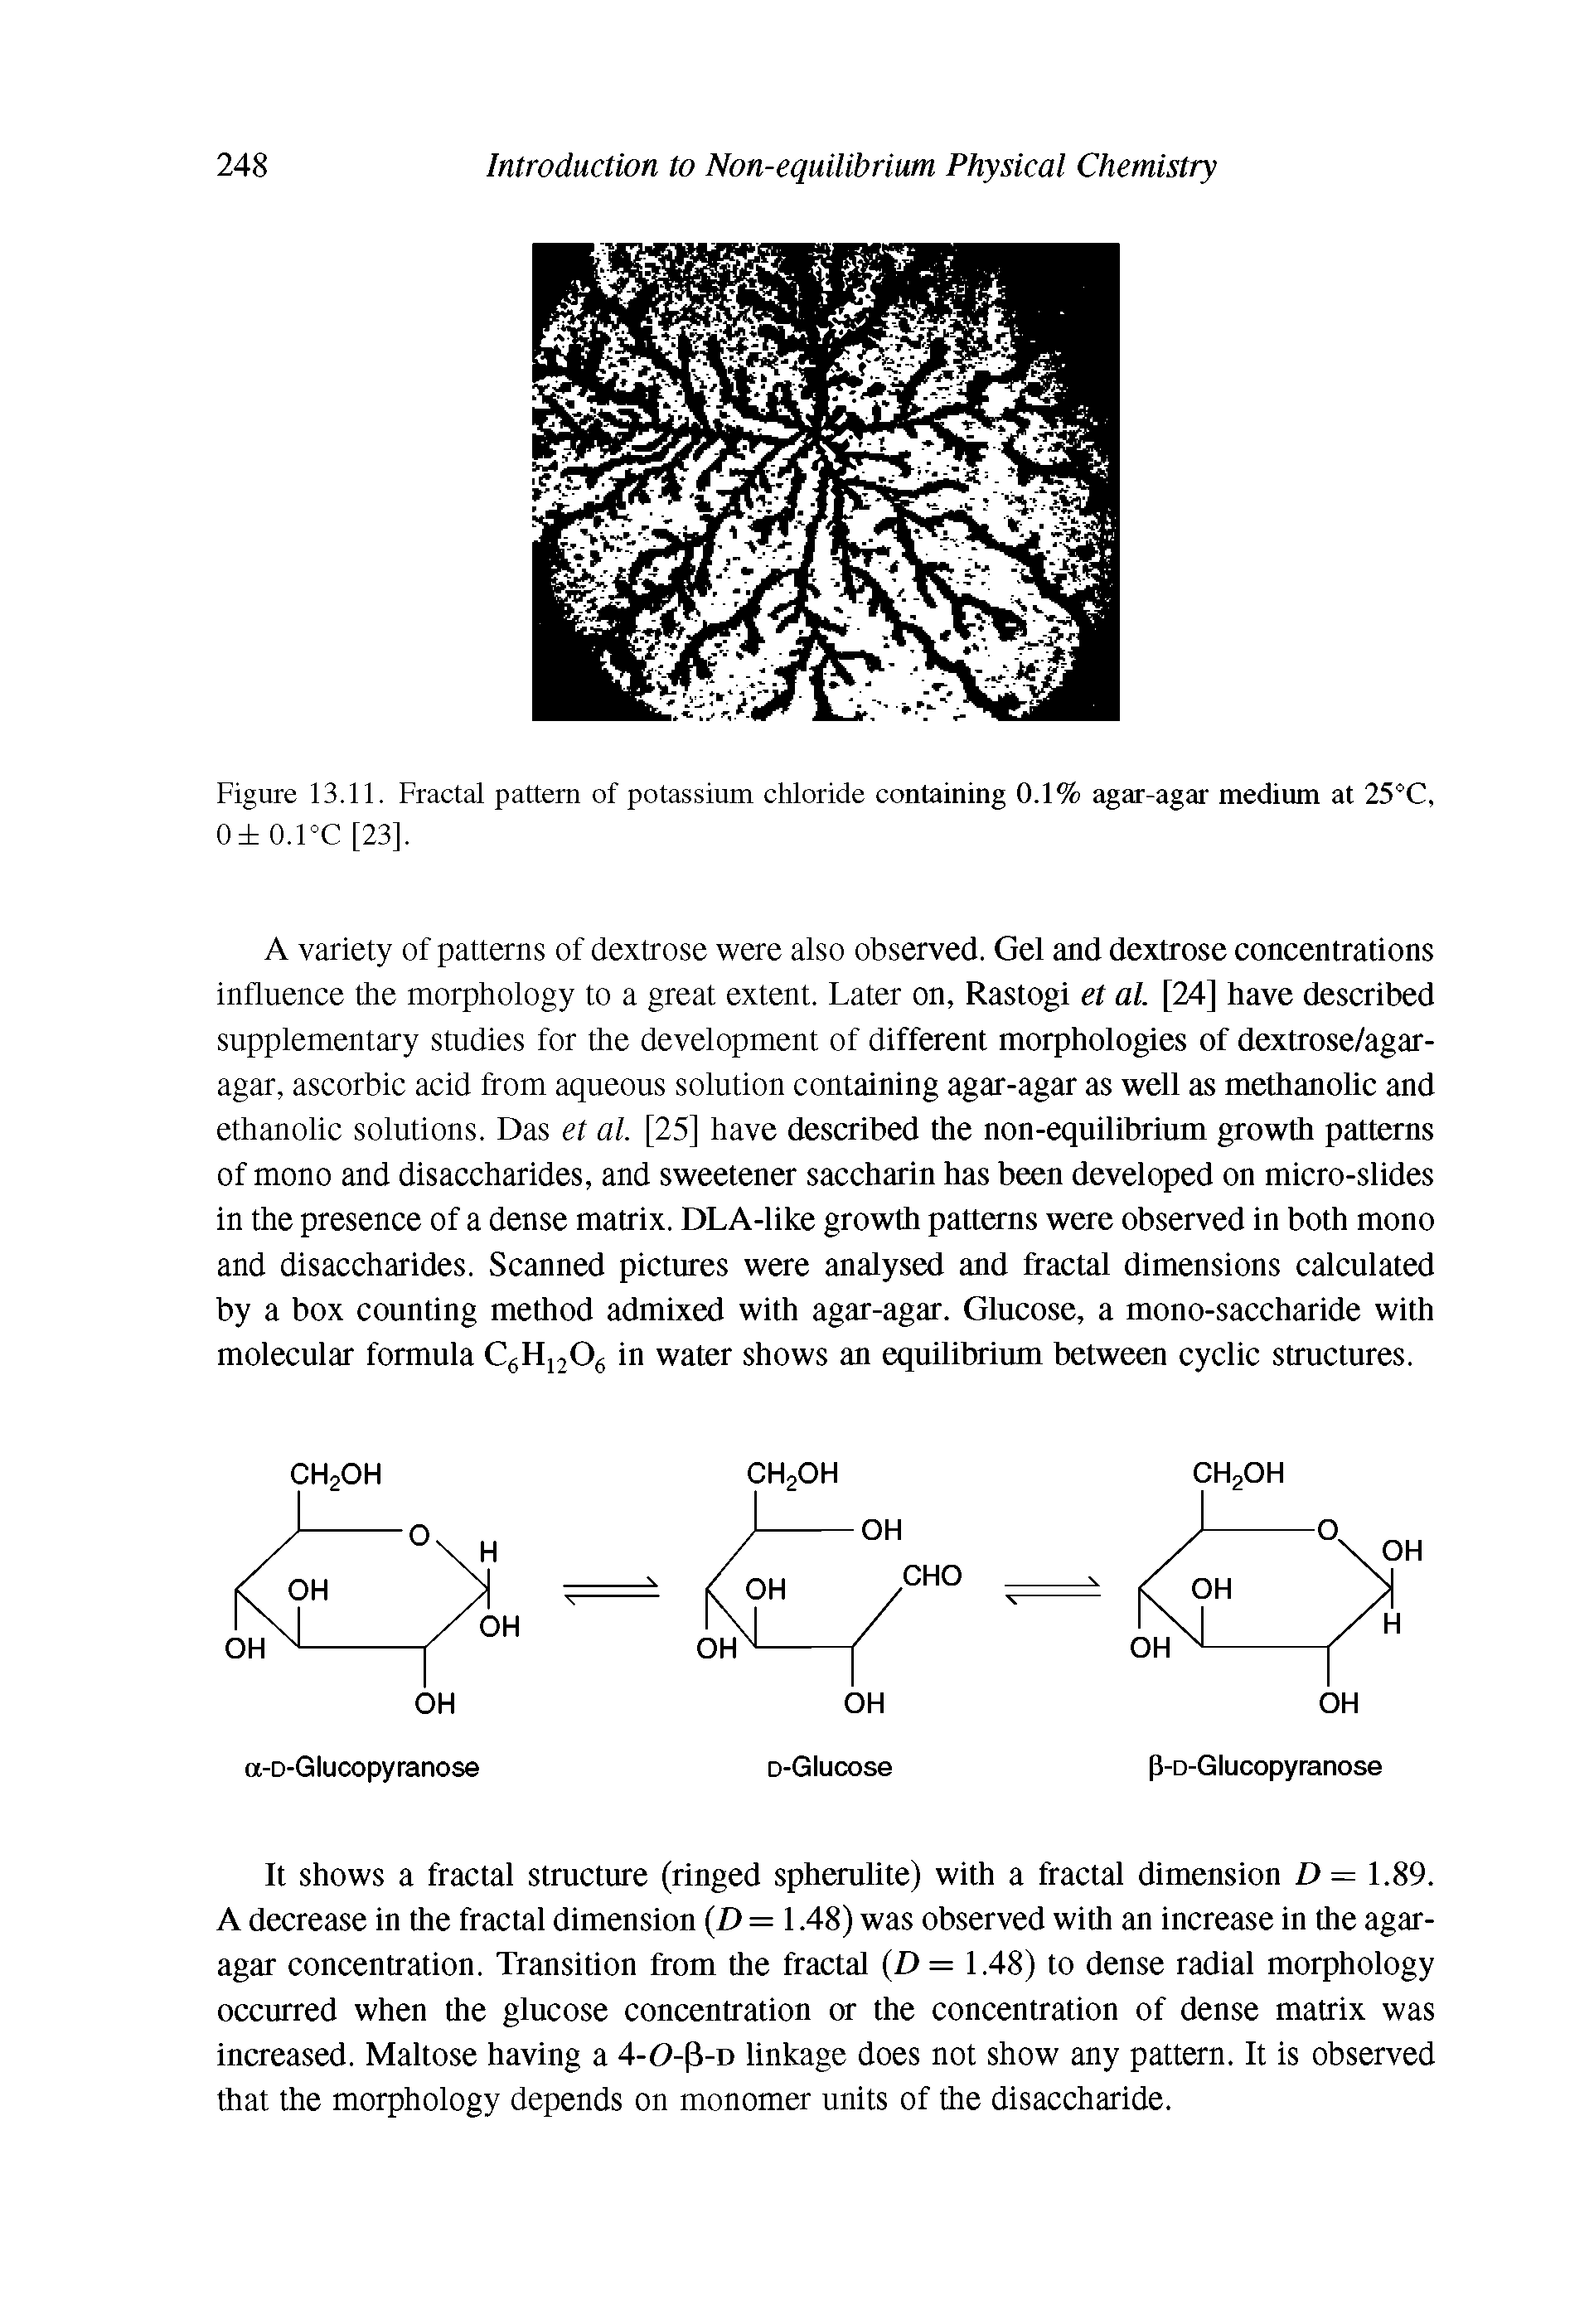 Figure 13.11. Fractal pattern of potassium chloride containing 0.1% agar-agar medium at 25°C, o o.rc [23].